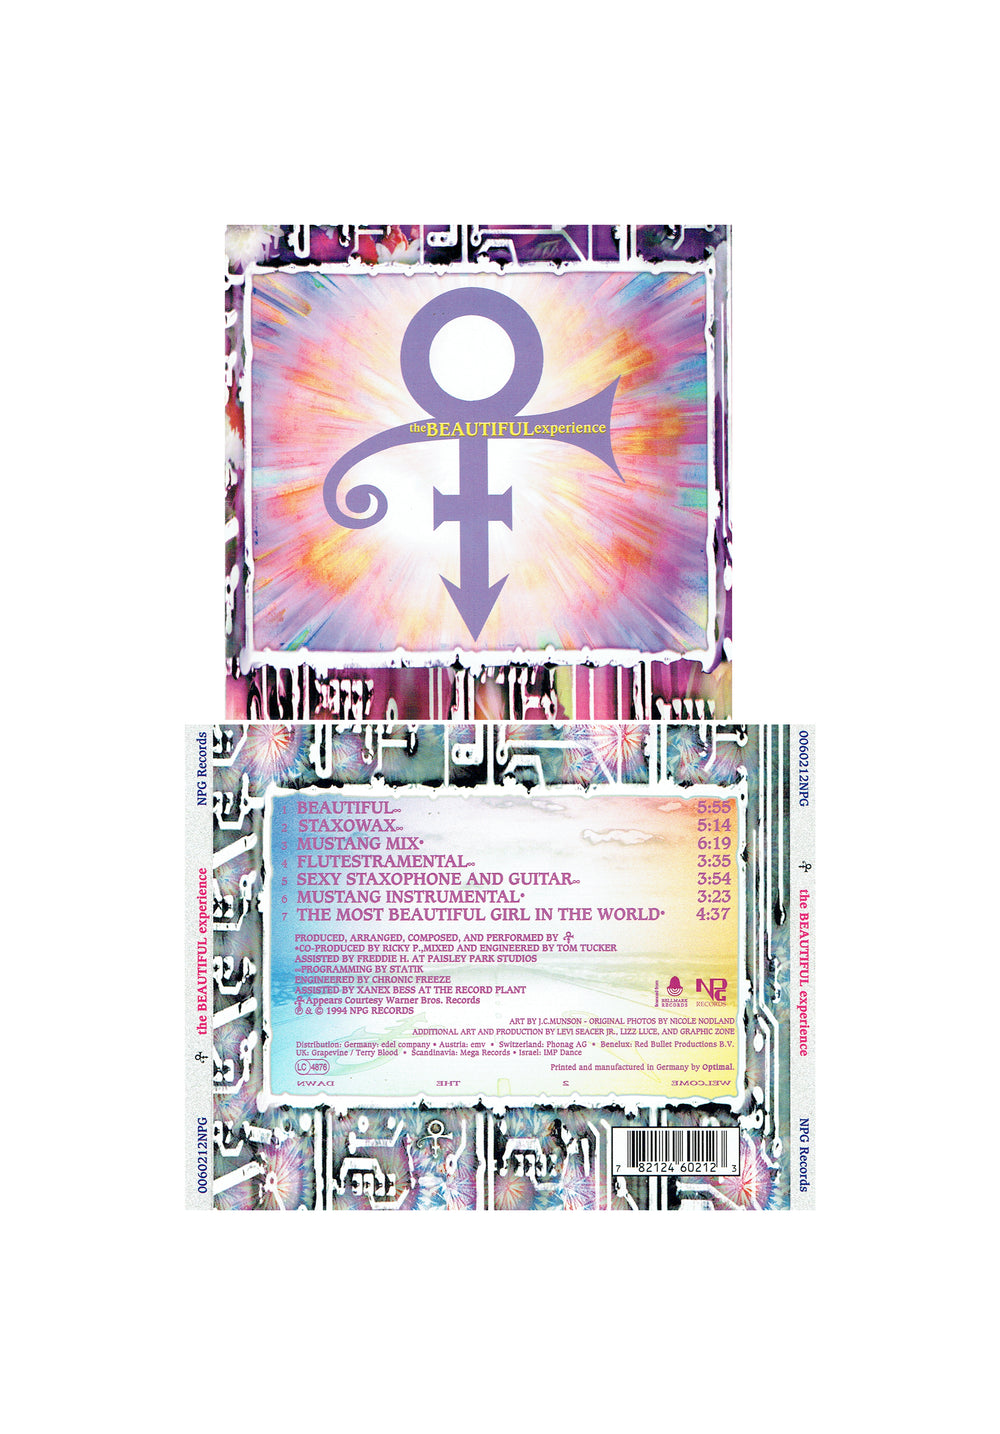 Prince – 0(+>  The Beautiful Experience CD Album EU Preloved: 1994